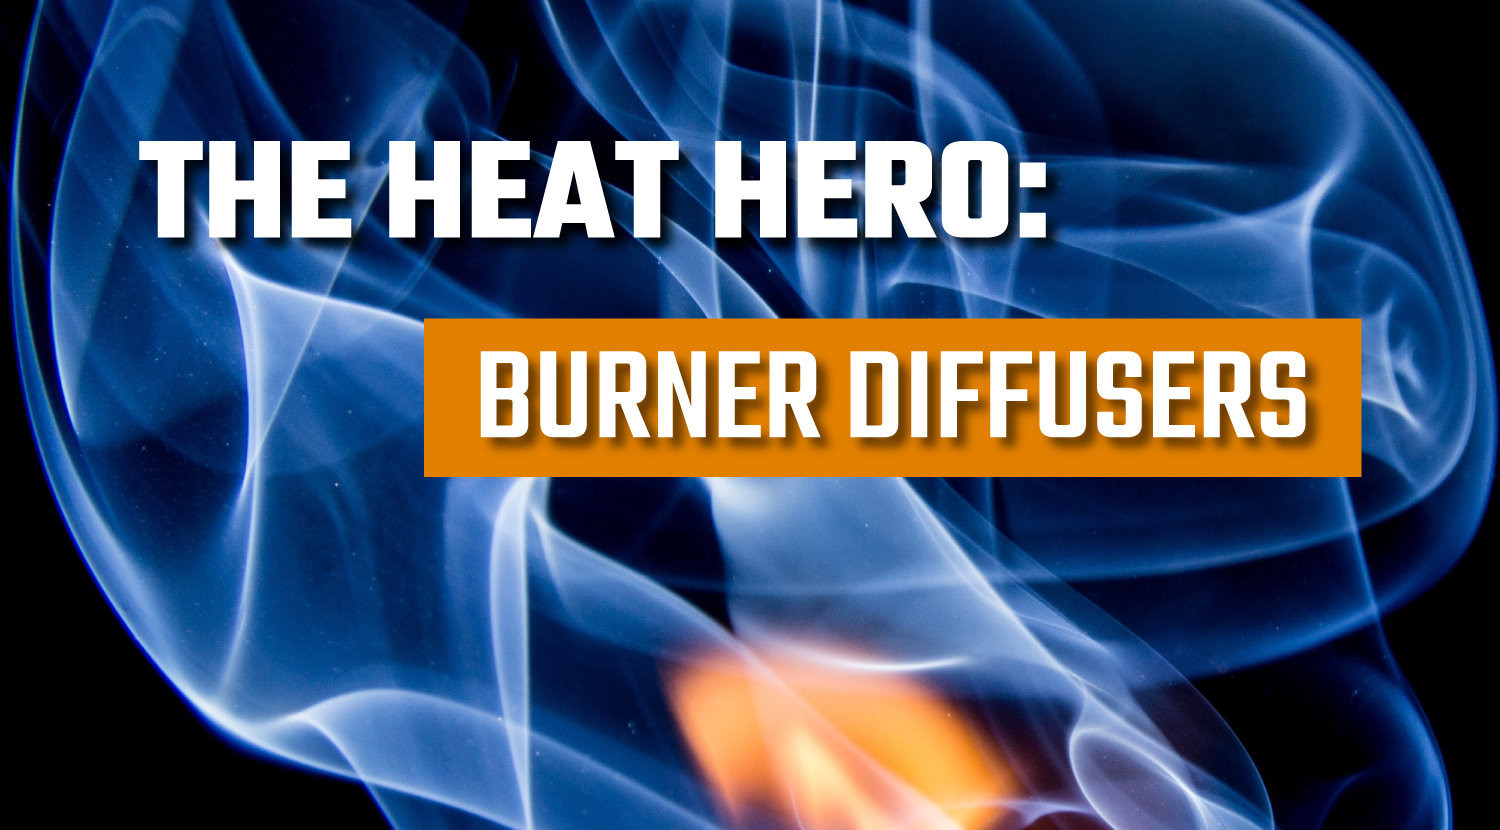 The Heat Hero: Burner Diffusers